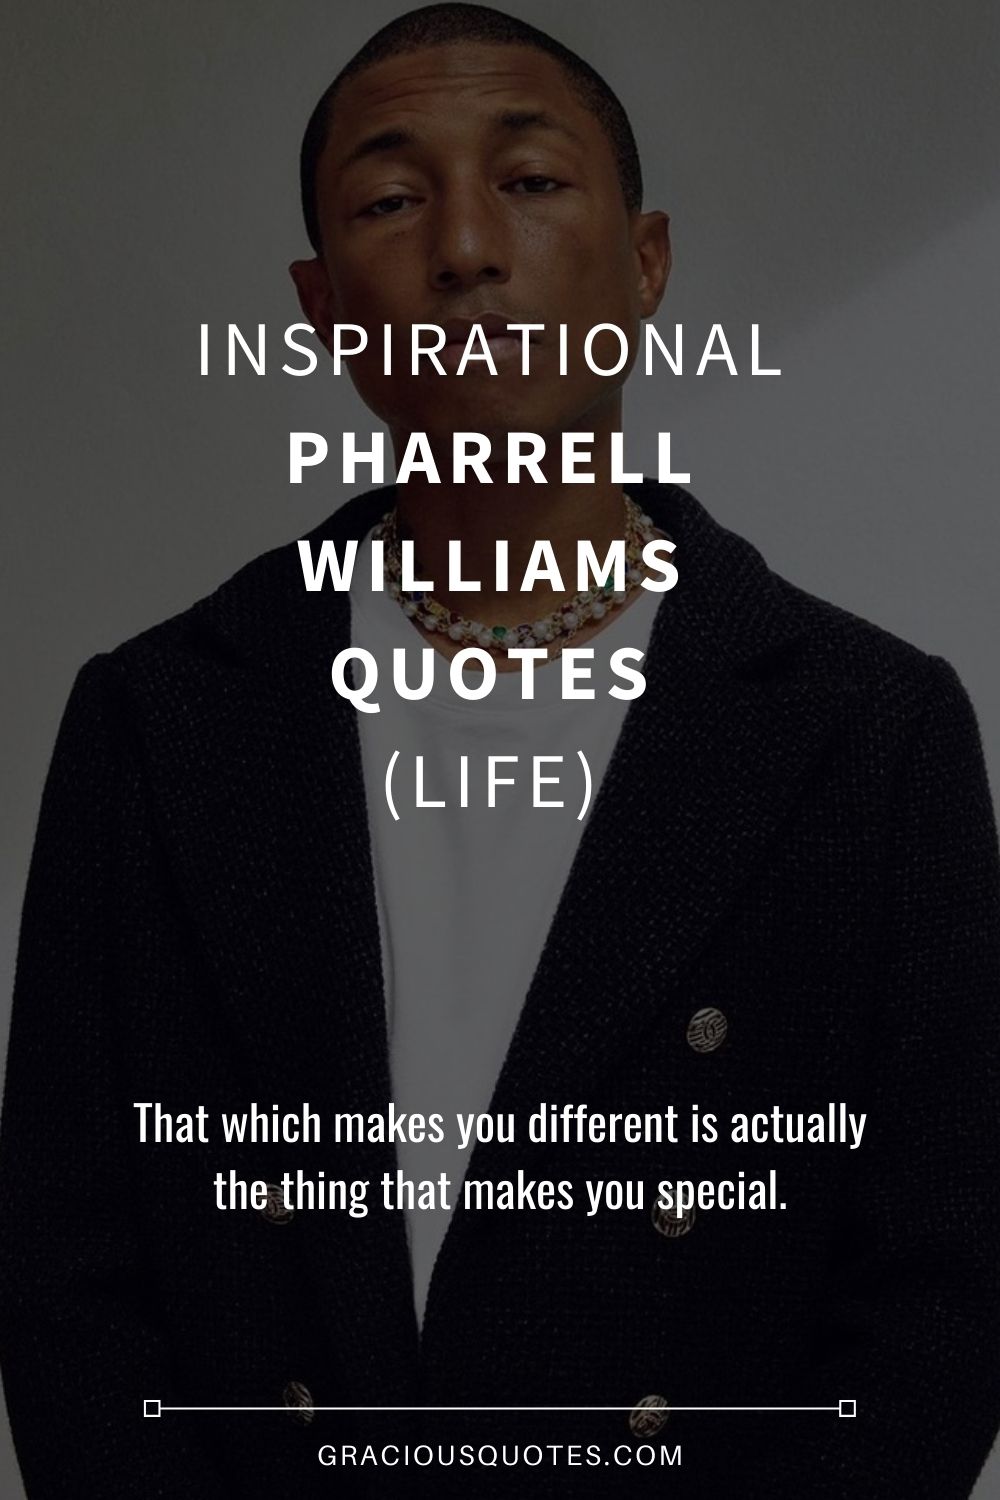 Inspirational Pharrell Williams Quotes LIFE Gracious Quotes